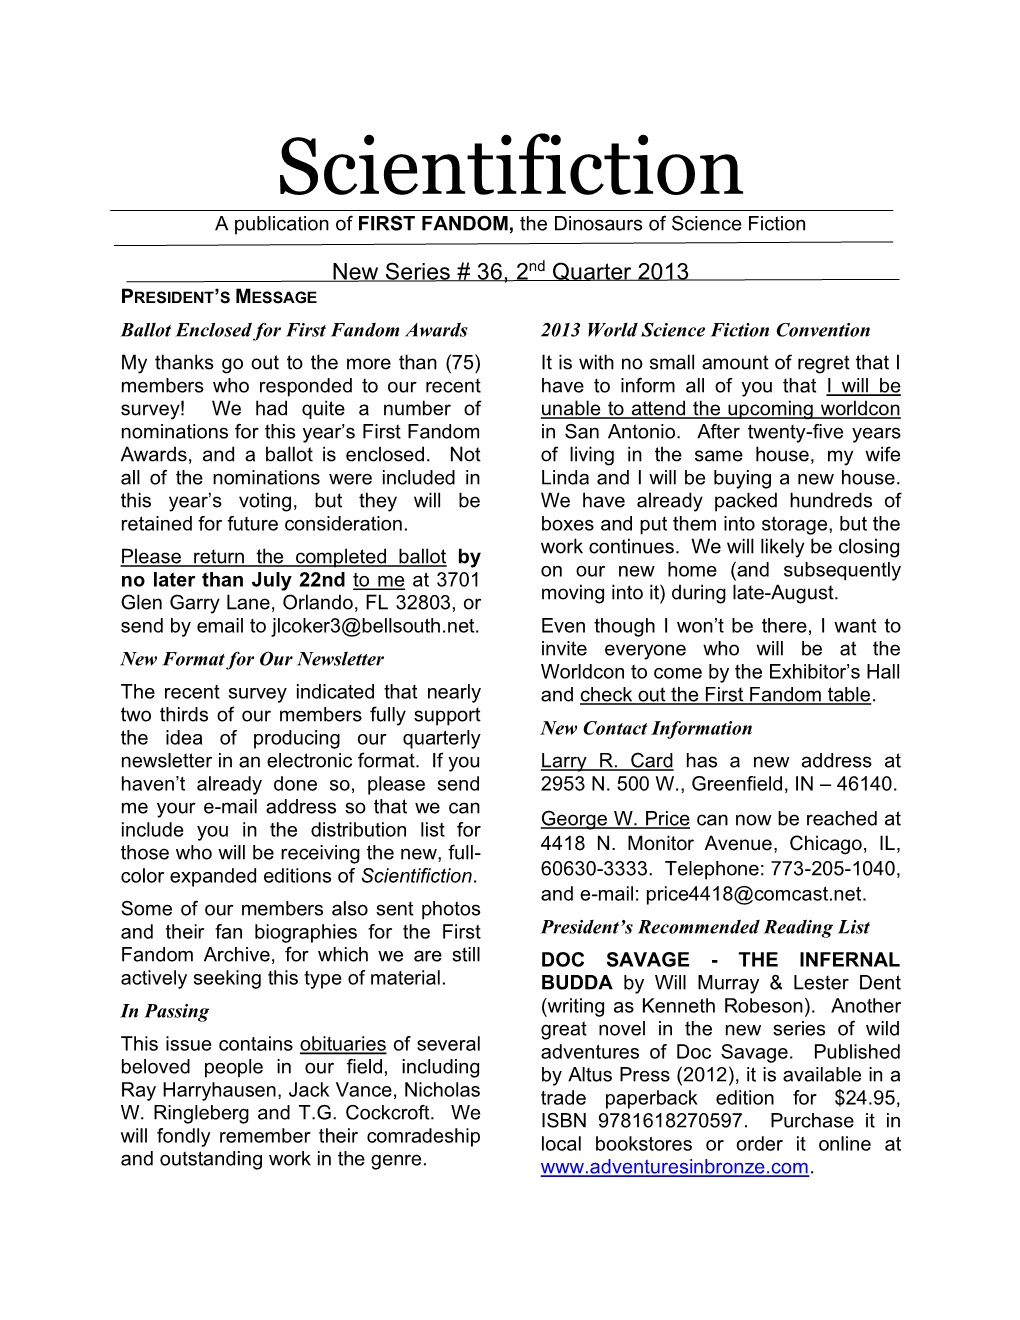 Scientifiction 36